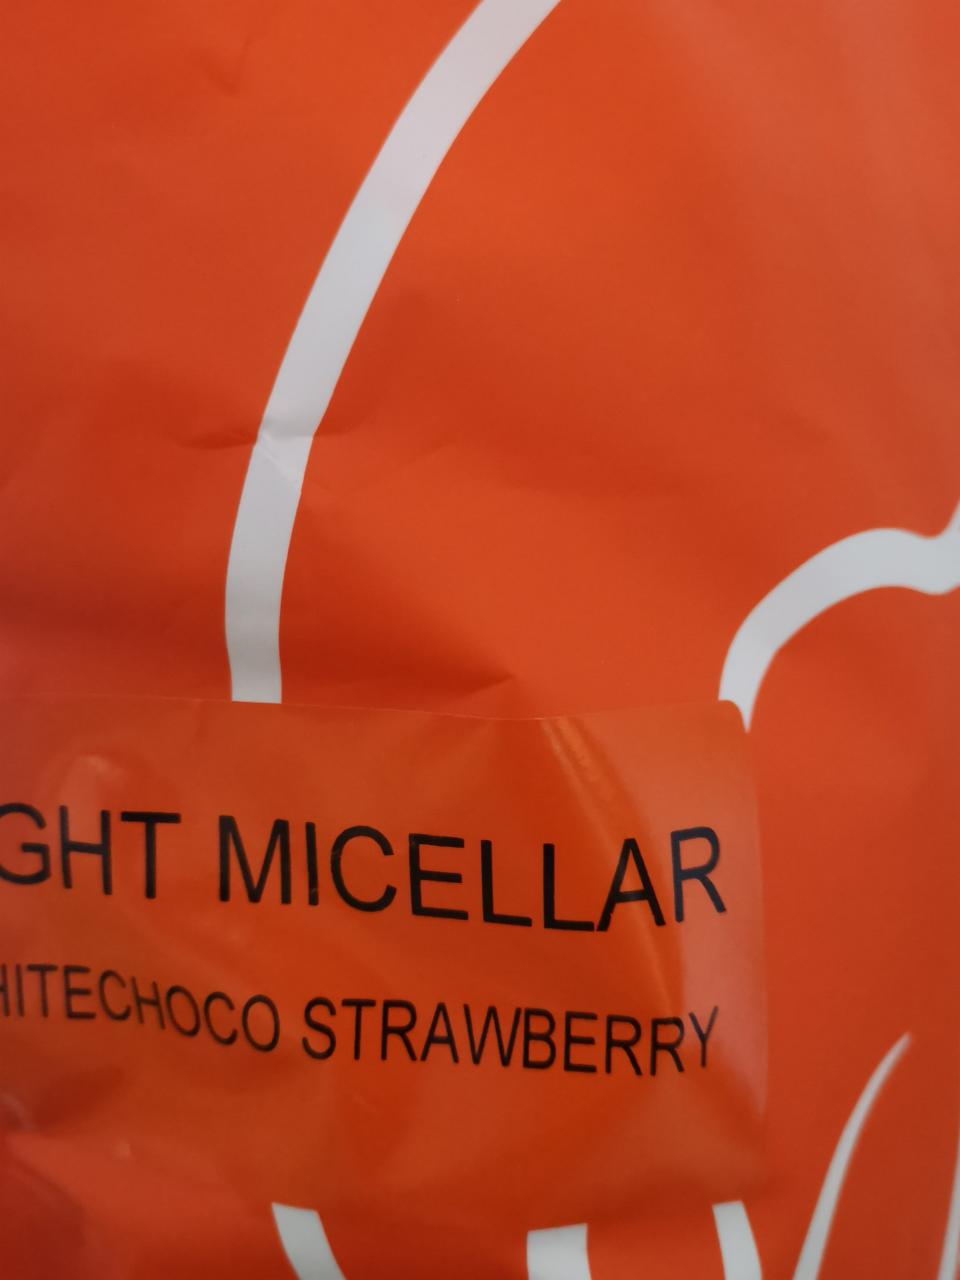 Fotografie - Night micellar Whitechoco strawberry still mass